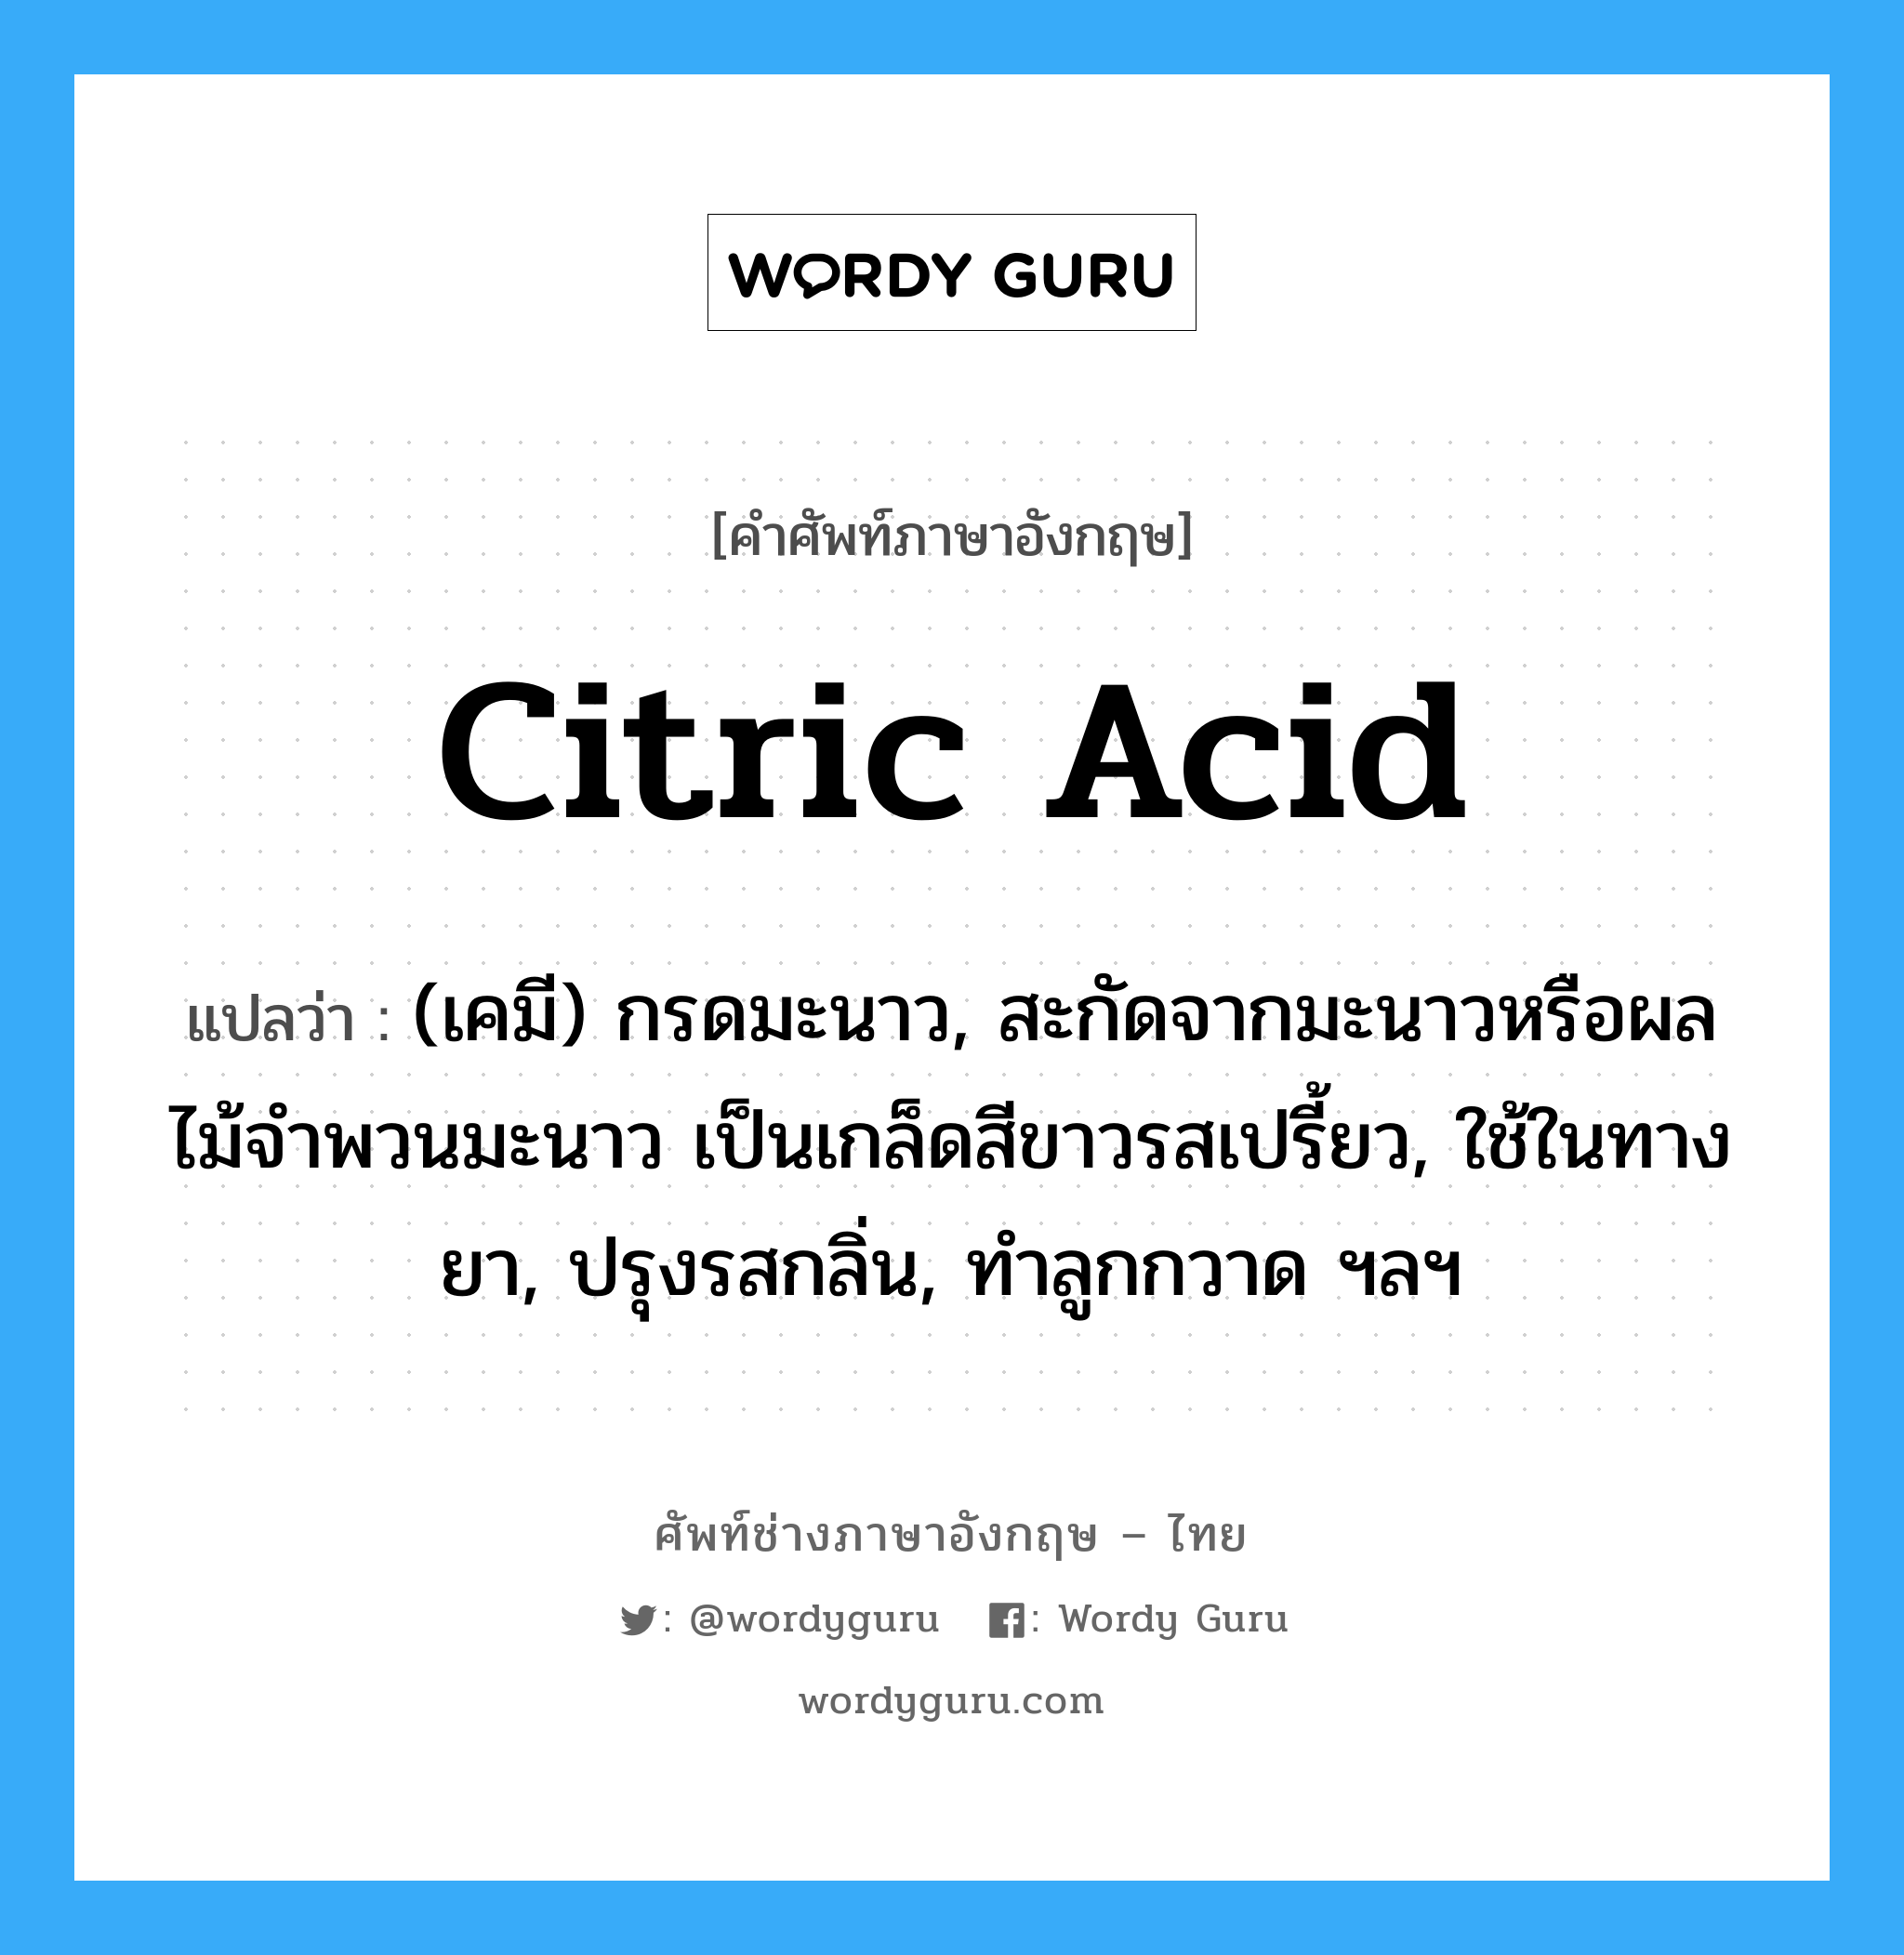 citric acid แปลว่า?, คำศัพท์ช่างภาษาอังกฤษ - ไทย citric acid คำศัพท์ภาษาอังกฤษ citric acid แปลว่า (เคมี) กรดมะนาว, สะกัดจากมะนาวหรือผลไม้จำพวนมะนาว เป็นเกล็ดสีขาวรสเปรี้ยว, ใช้ในทางยา, ปรุงรสกลิ่น, ทำลูกกวาด ฯลฯ